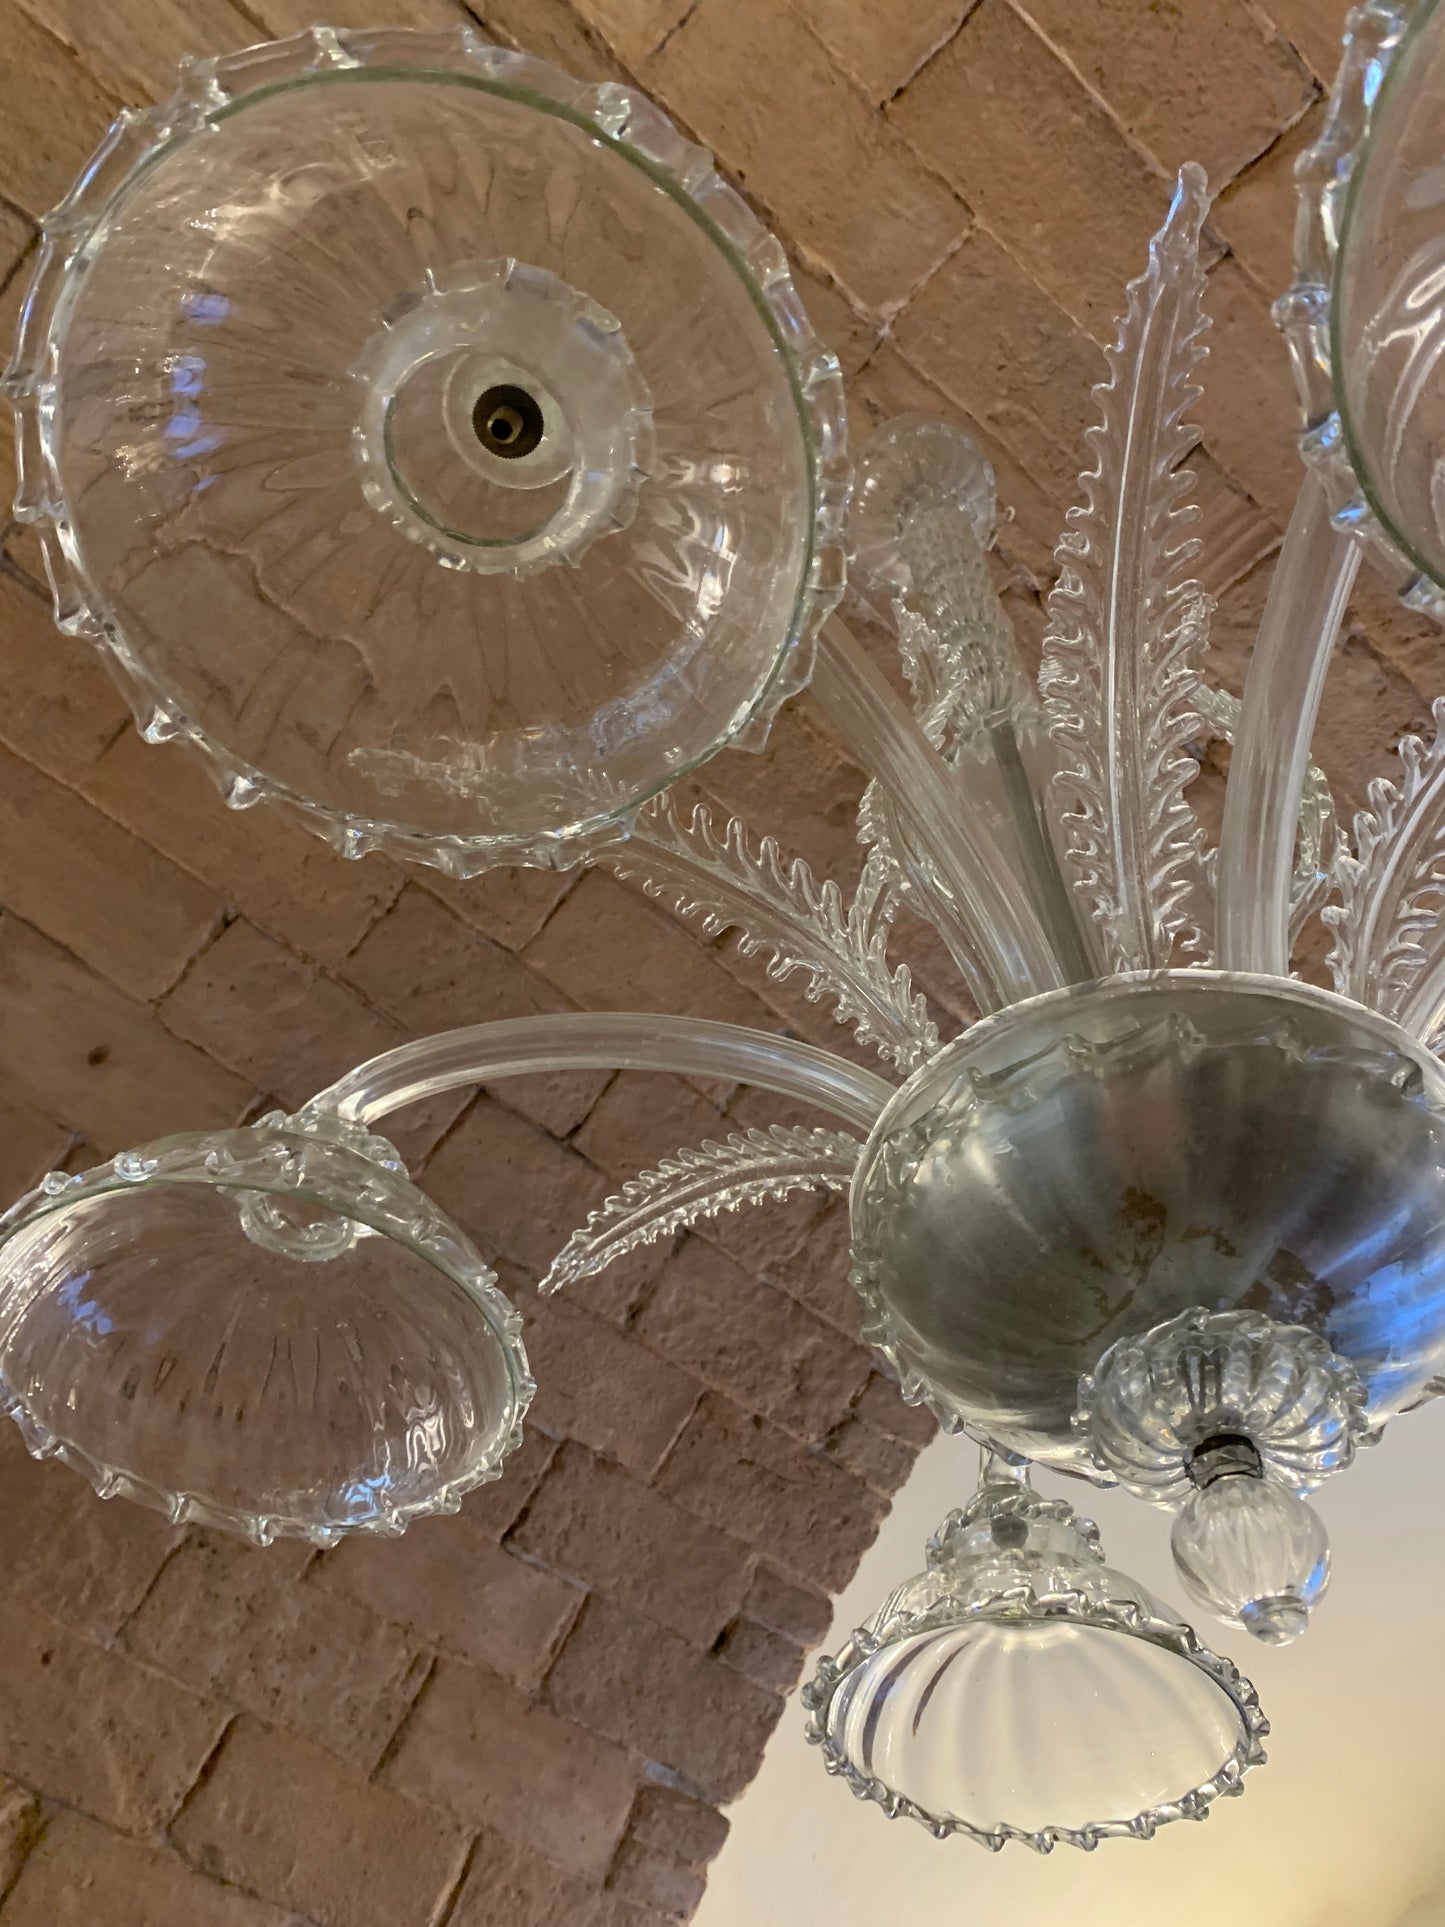 Murano. Circa 1940. 6 lights chandelier.